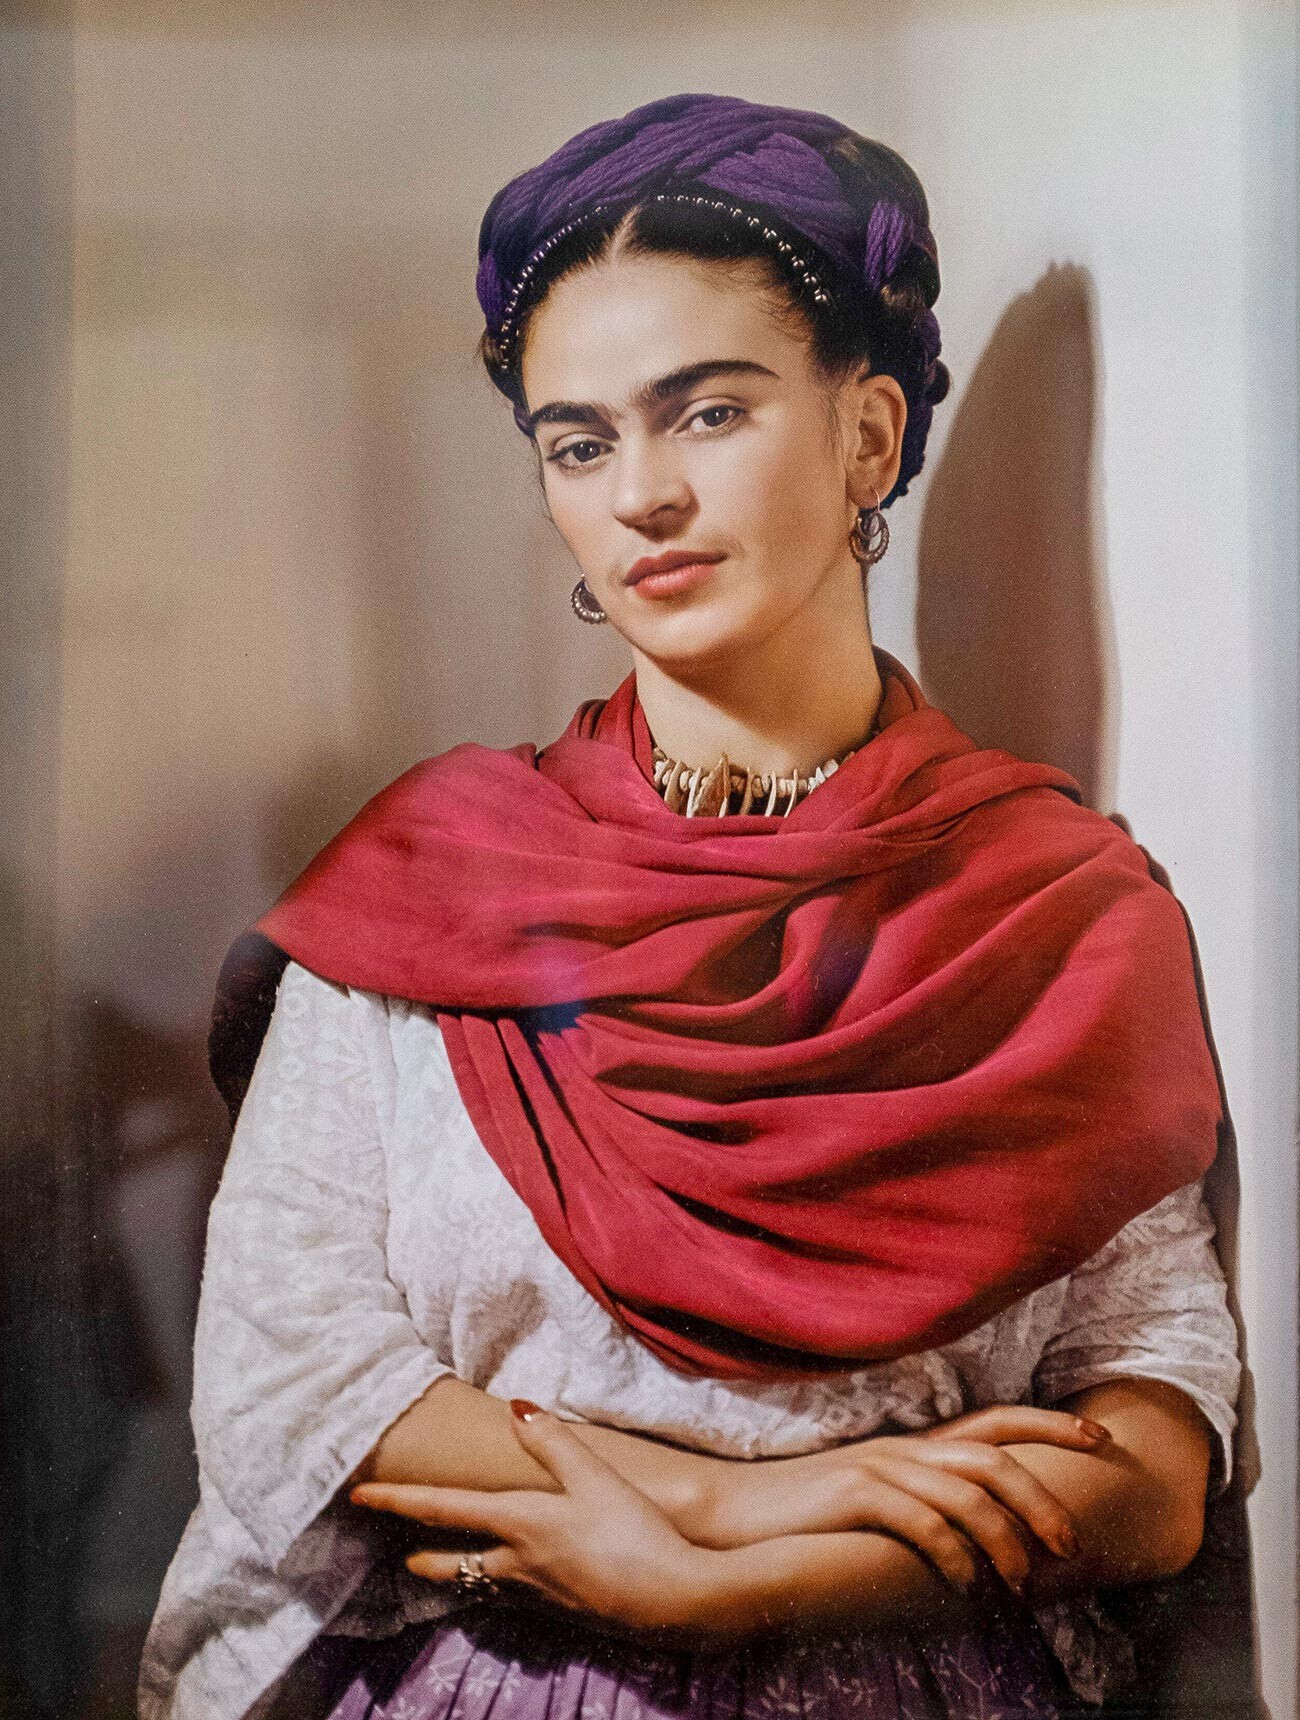 Frida Kahlo (1907-1954), pittrice messicana